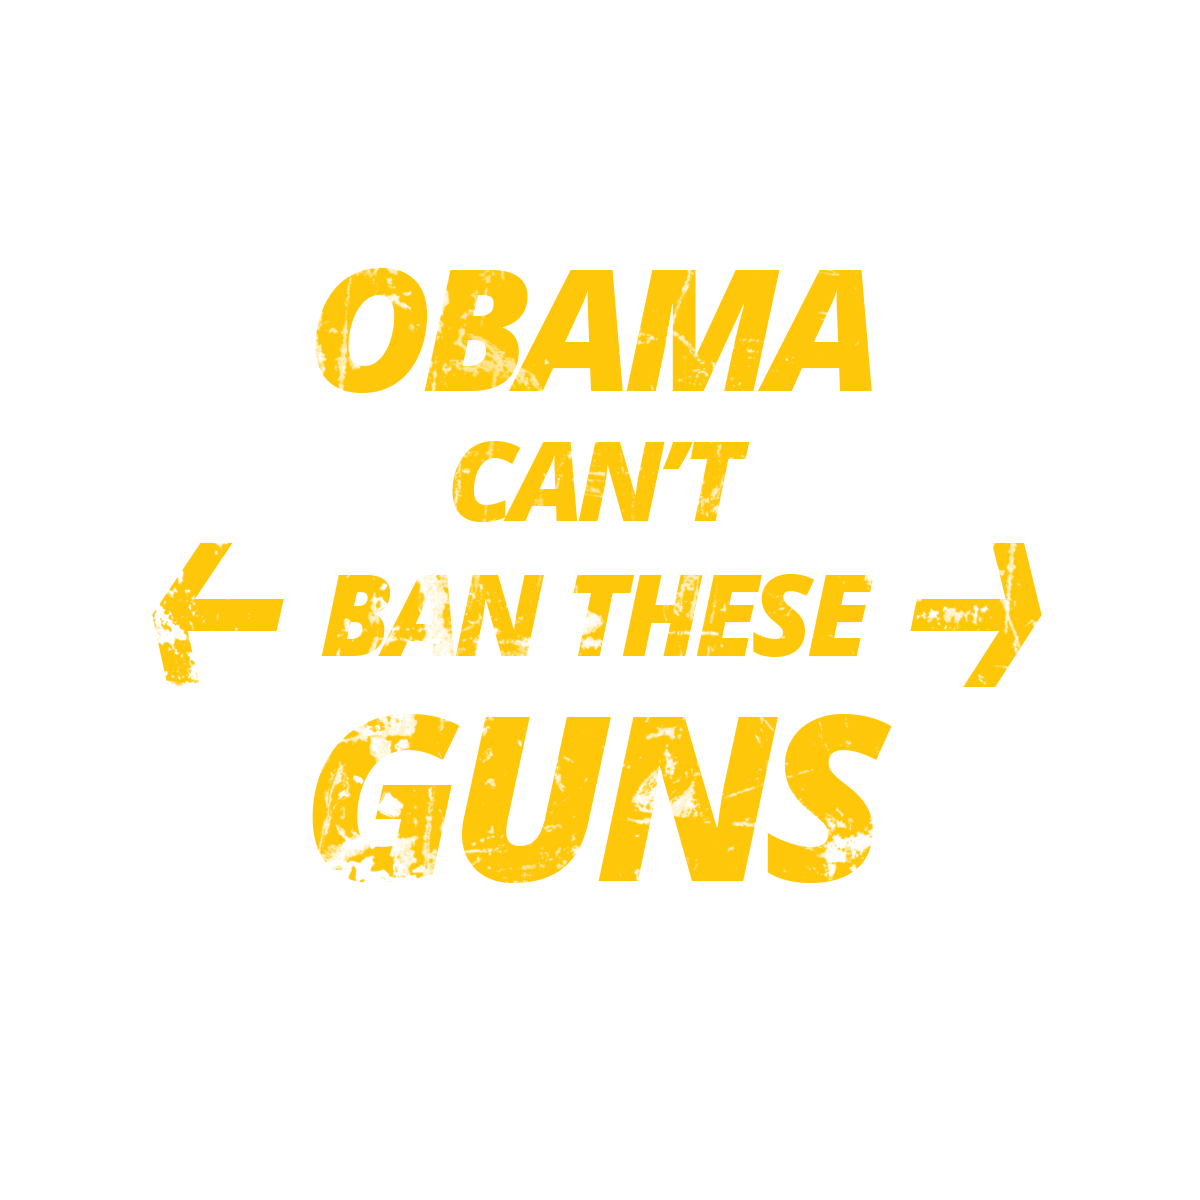 Obama Can't Ban These Guns